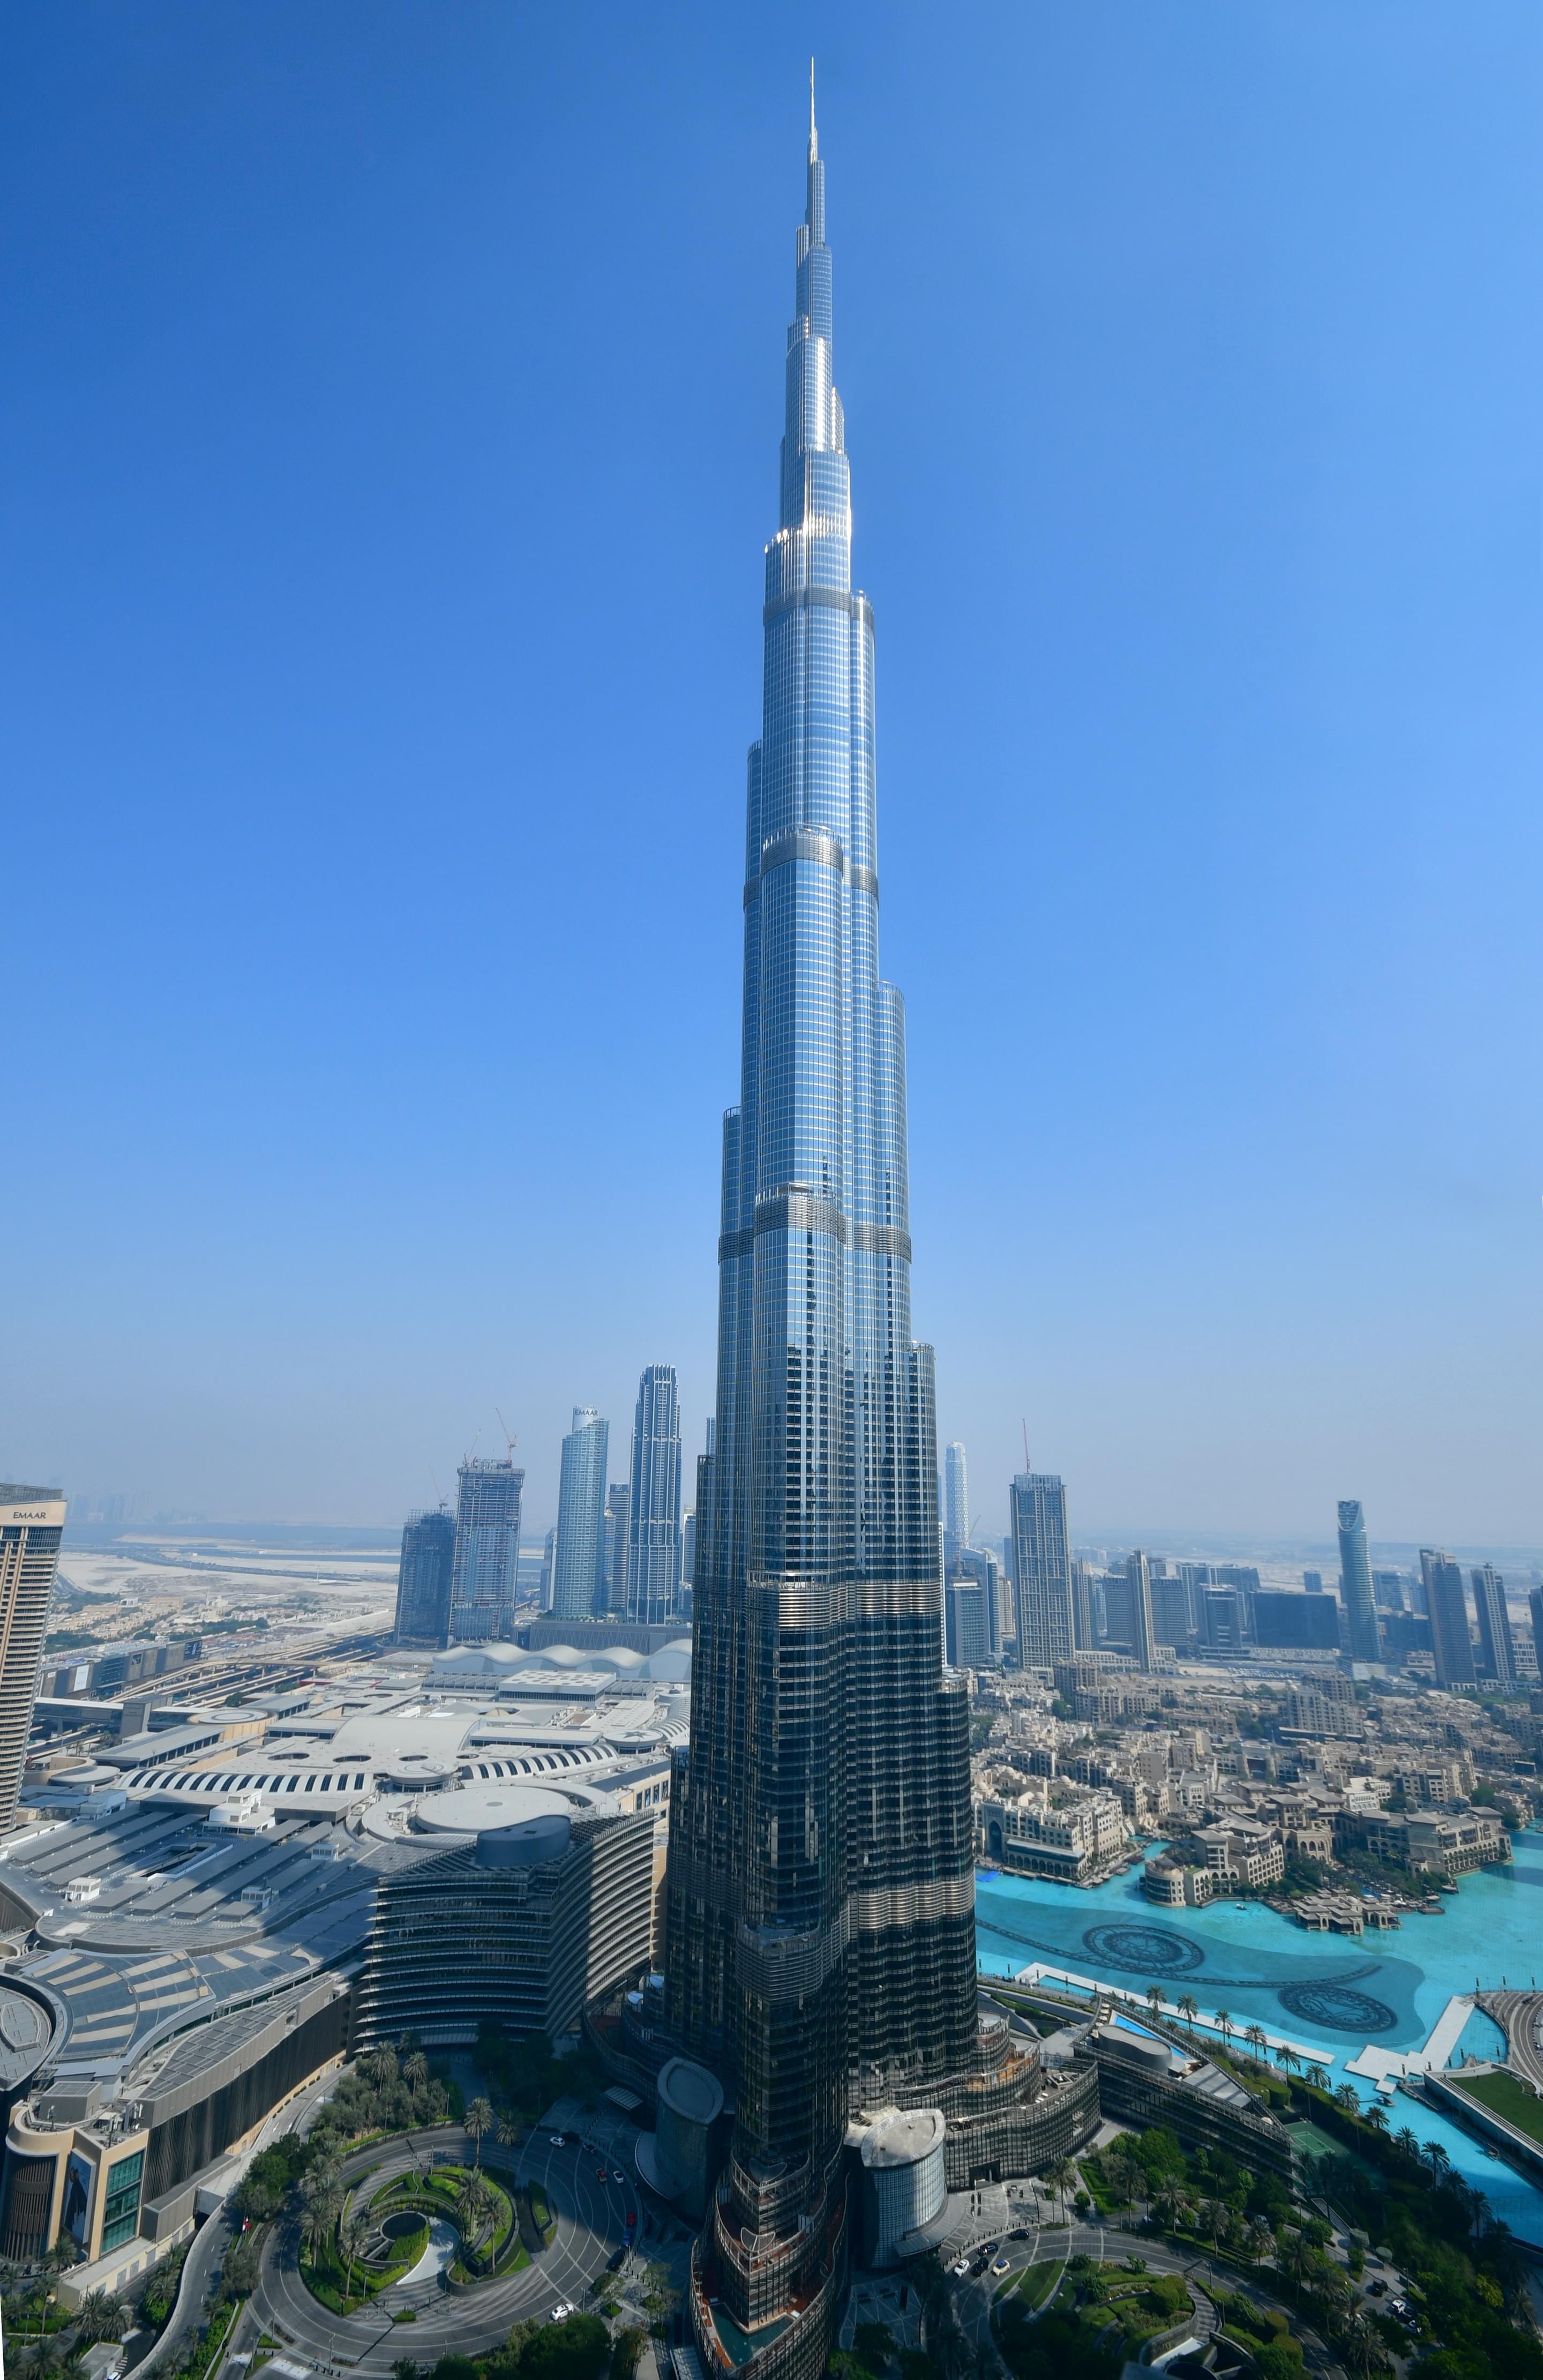 Piattaforme di osservazione a Dubai